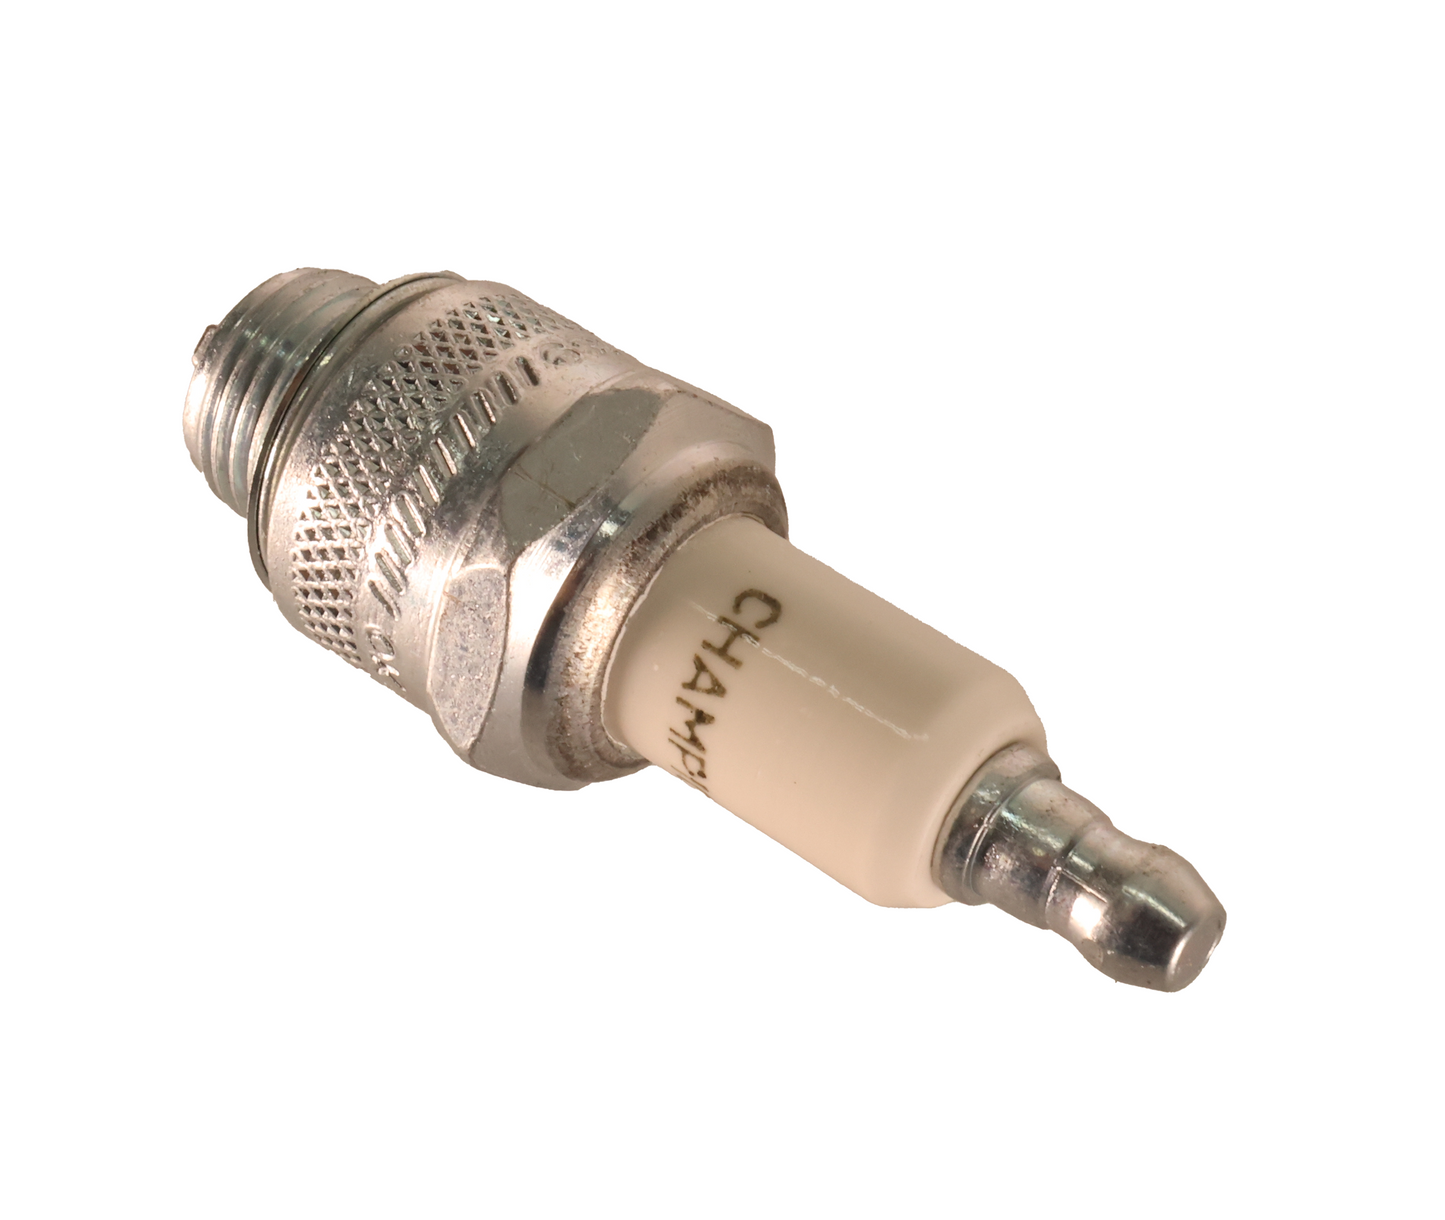 John Deere Original Equipment Spark Plug - TY26715